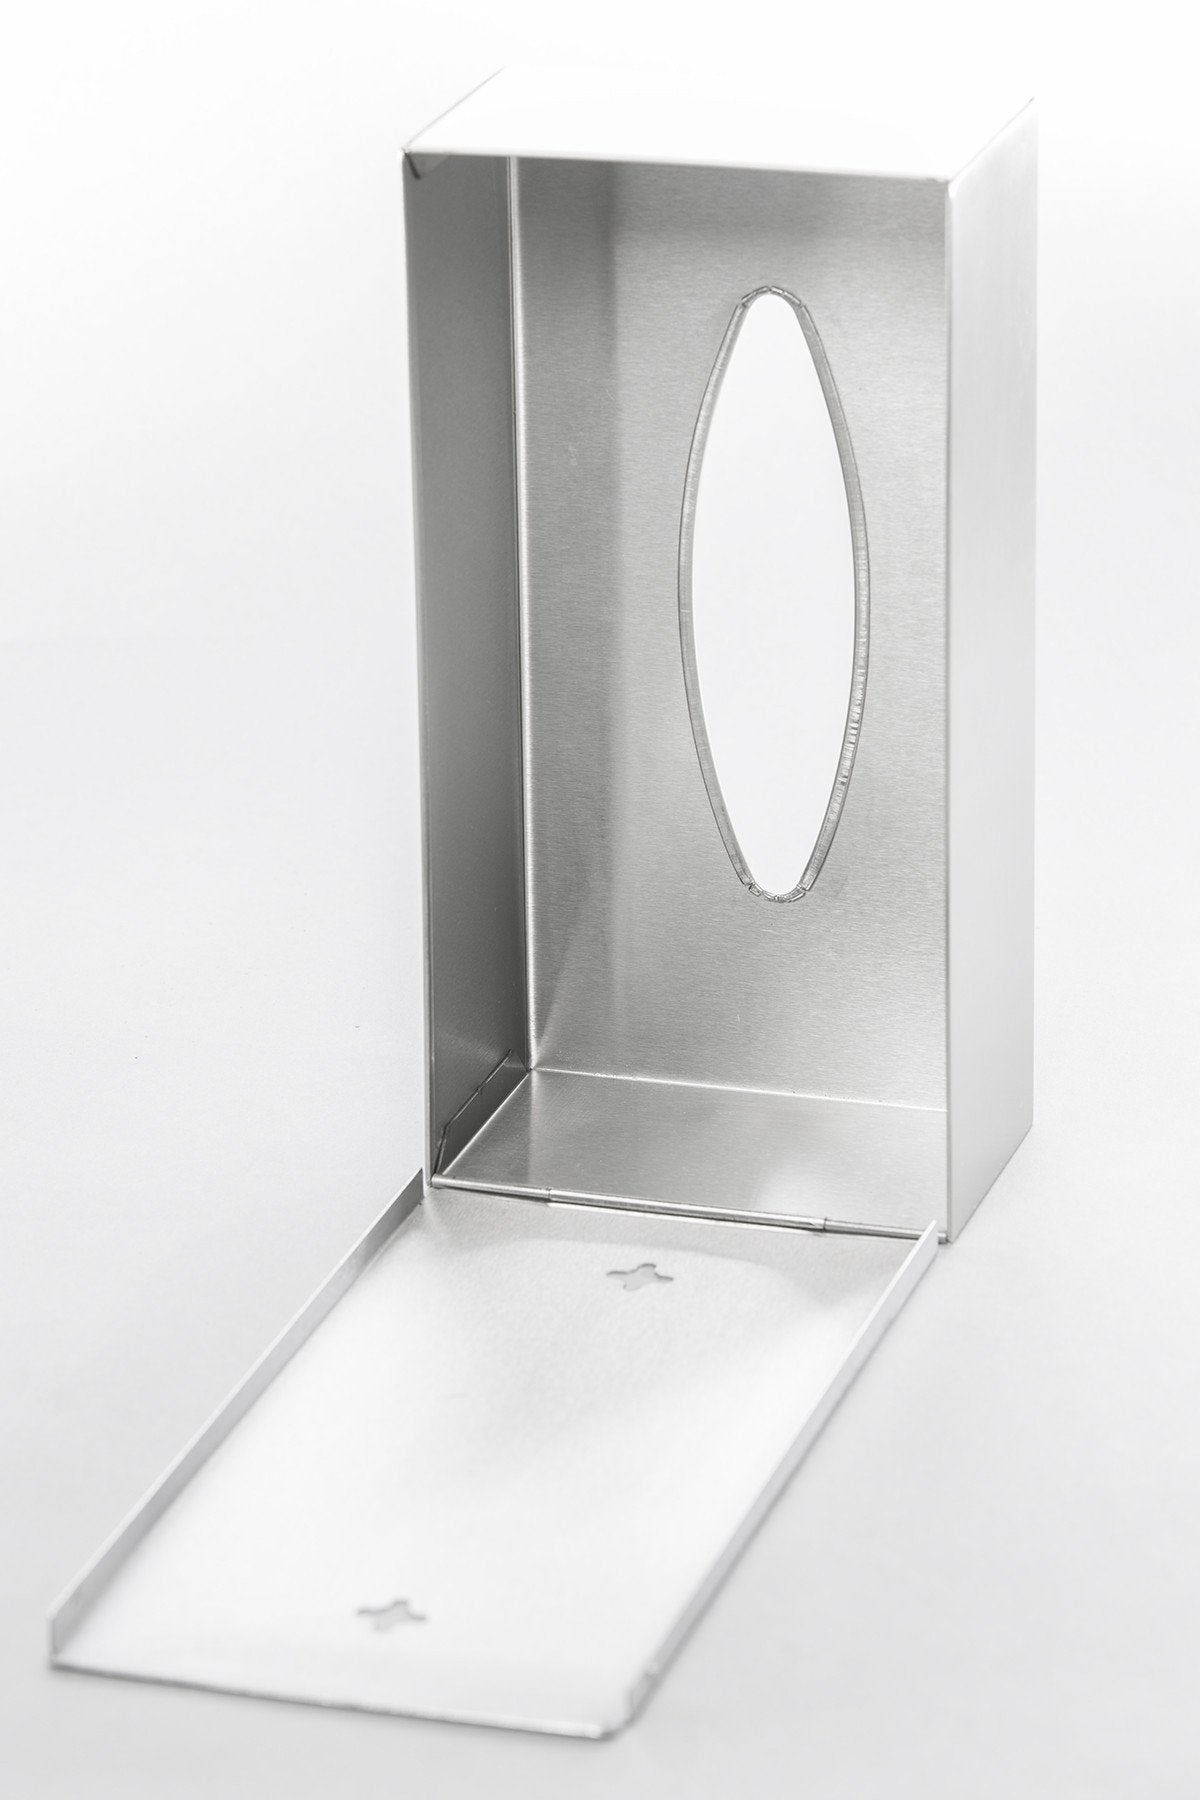 Nexio Paper Towel Dispenser - Polished - Blomus